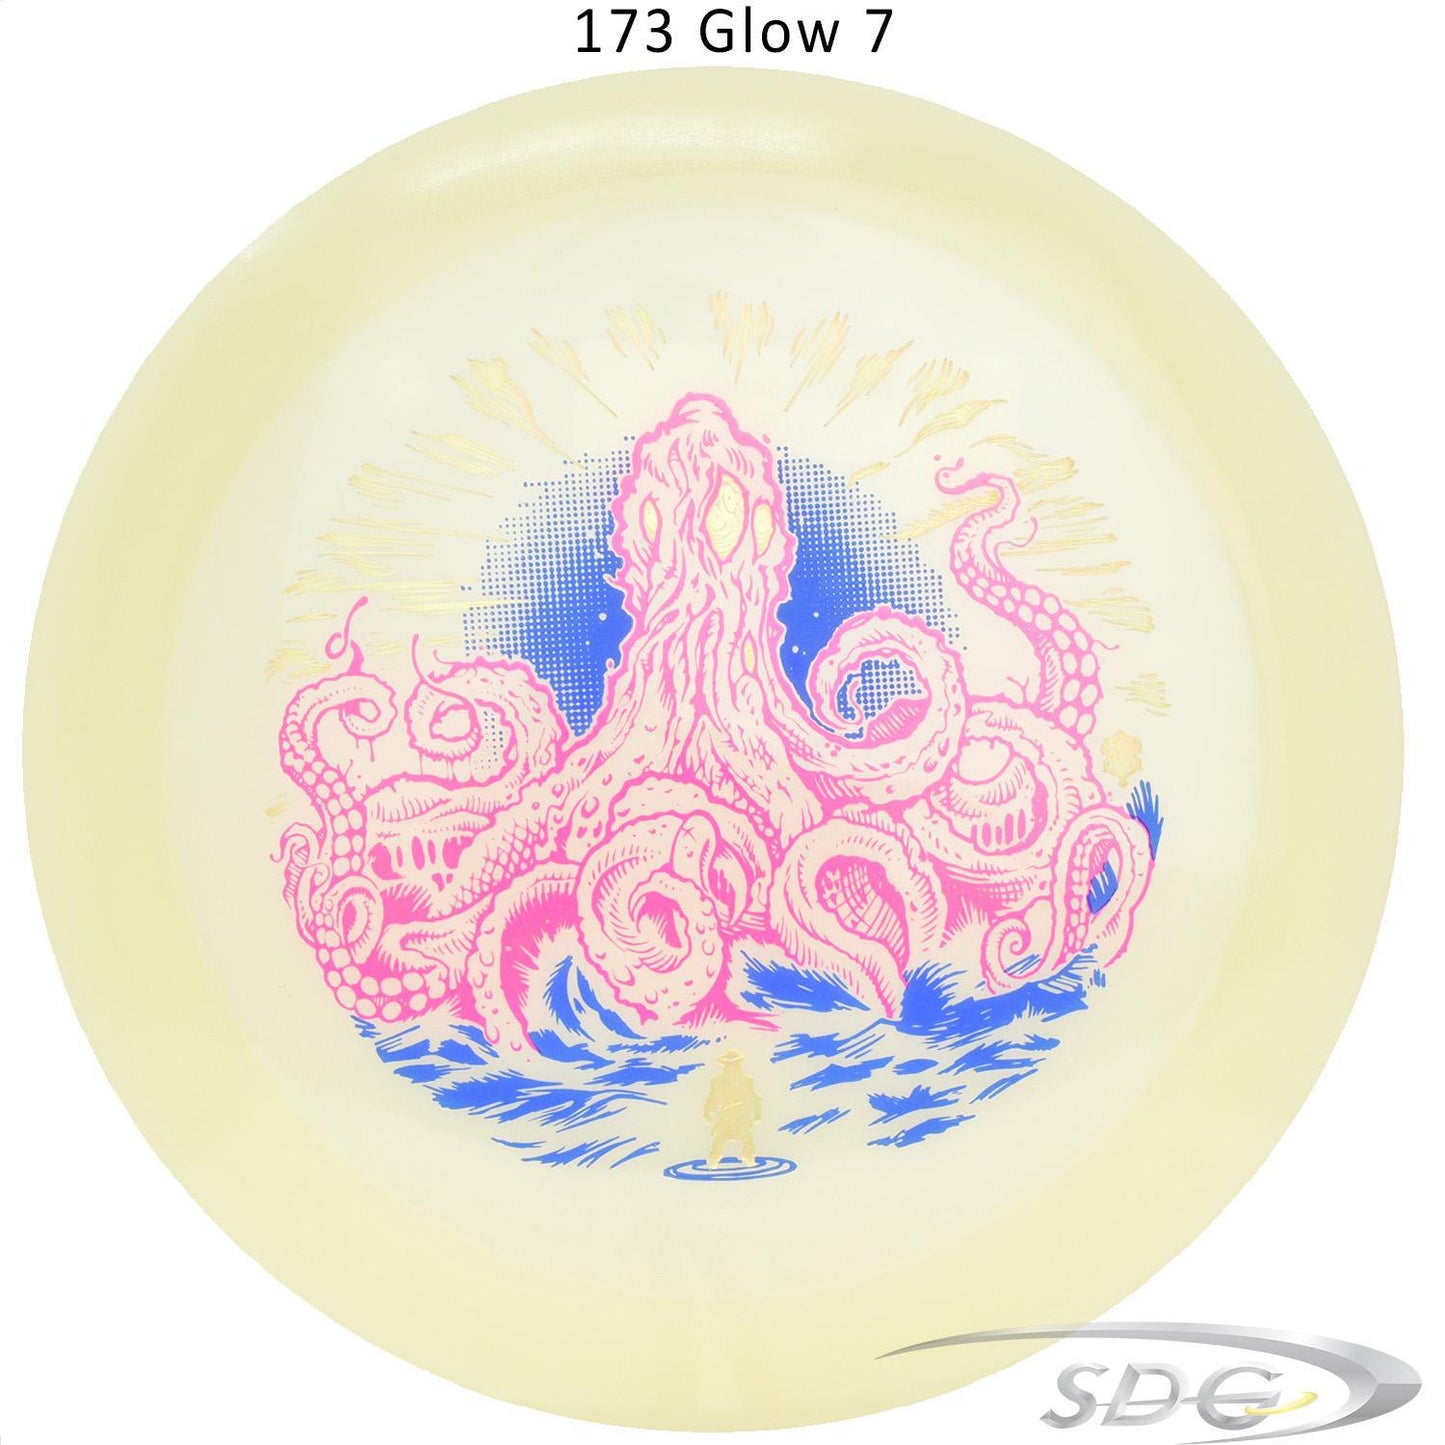 tsa-glow-synapse-kaiju-disc-golf-disc-golf-distance-driver 173 Glow 7 